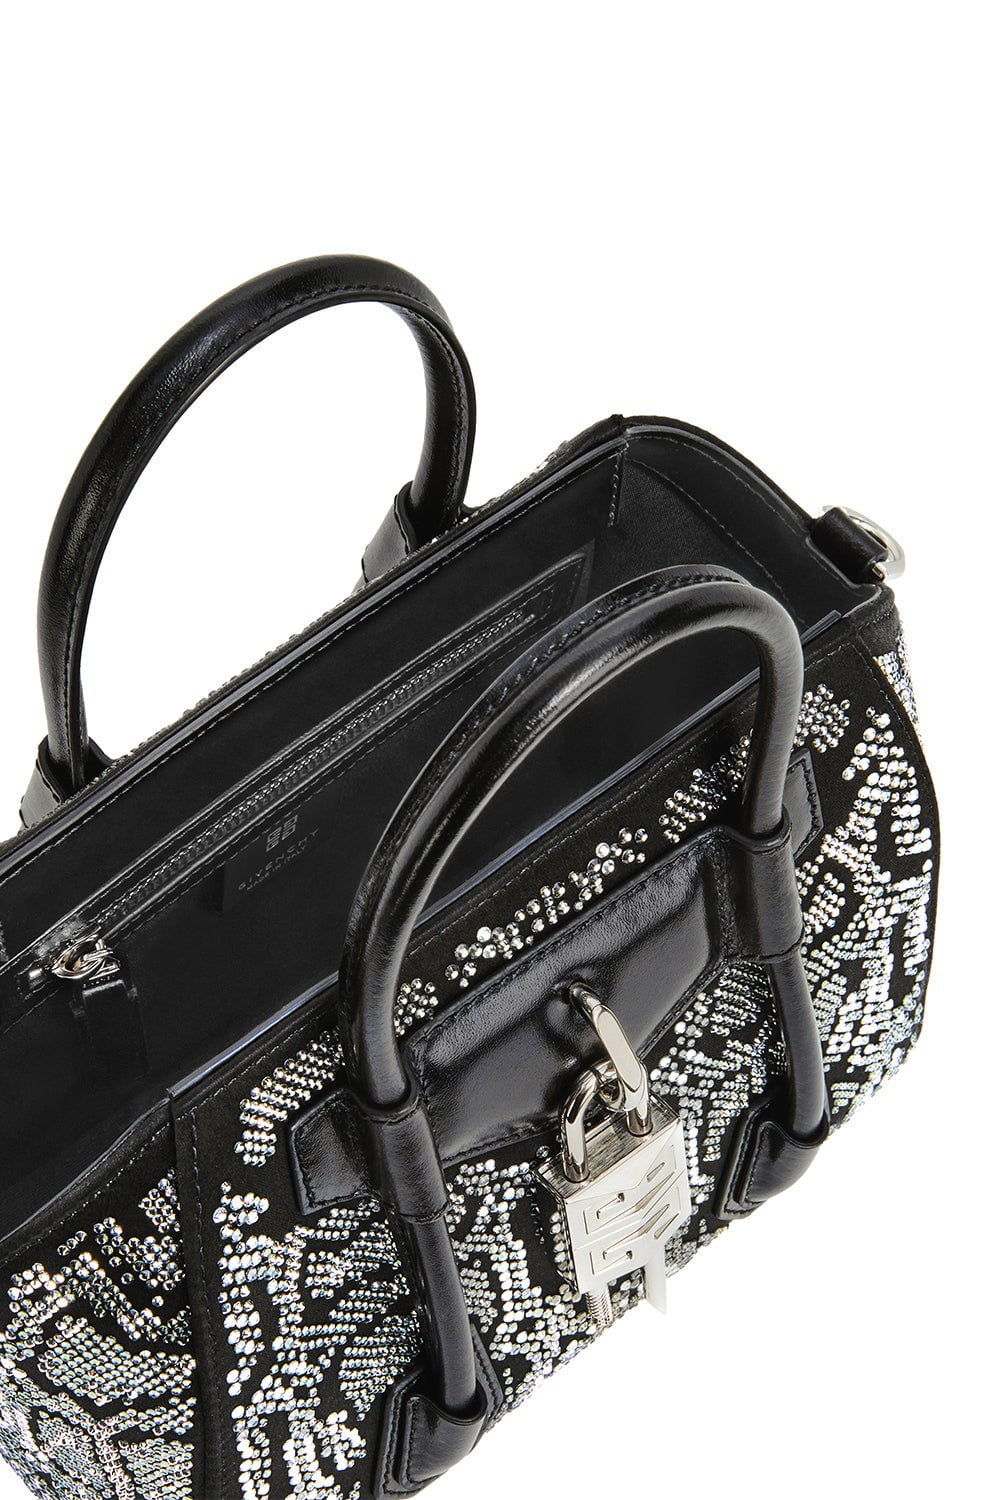 givenchy antigona mini black - Google Search  Givenchy antigona mini, Bags,  Givenchy handbags